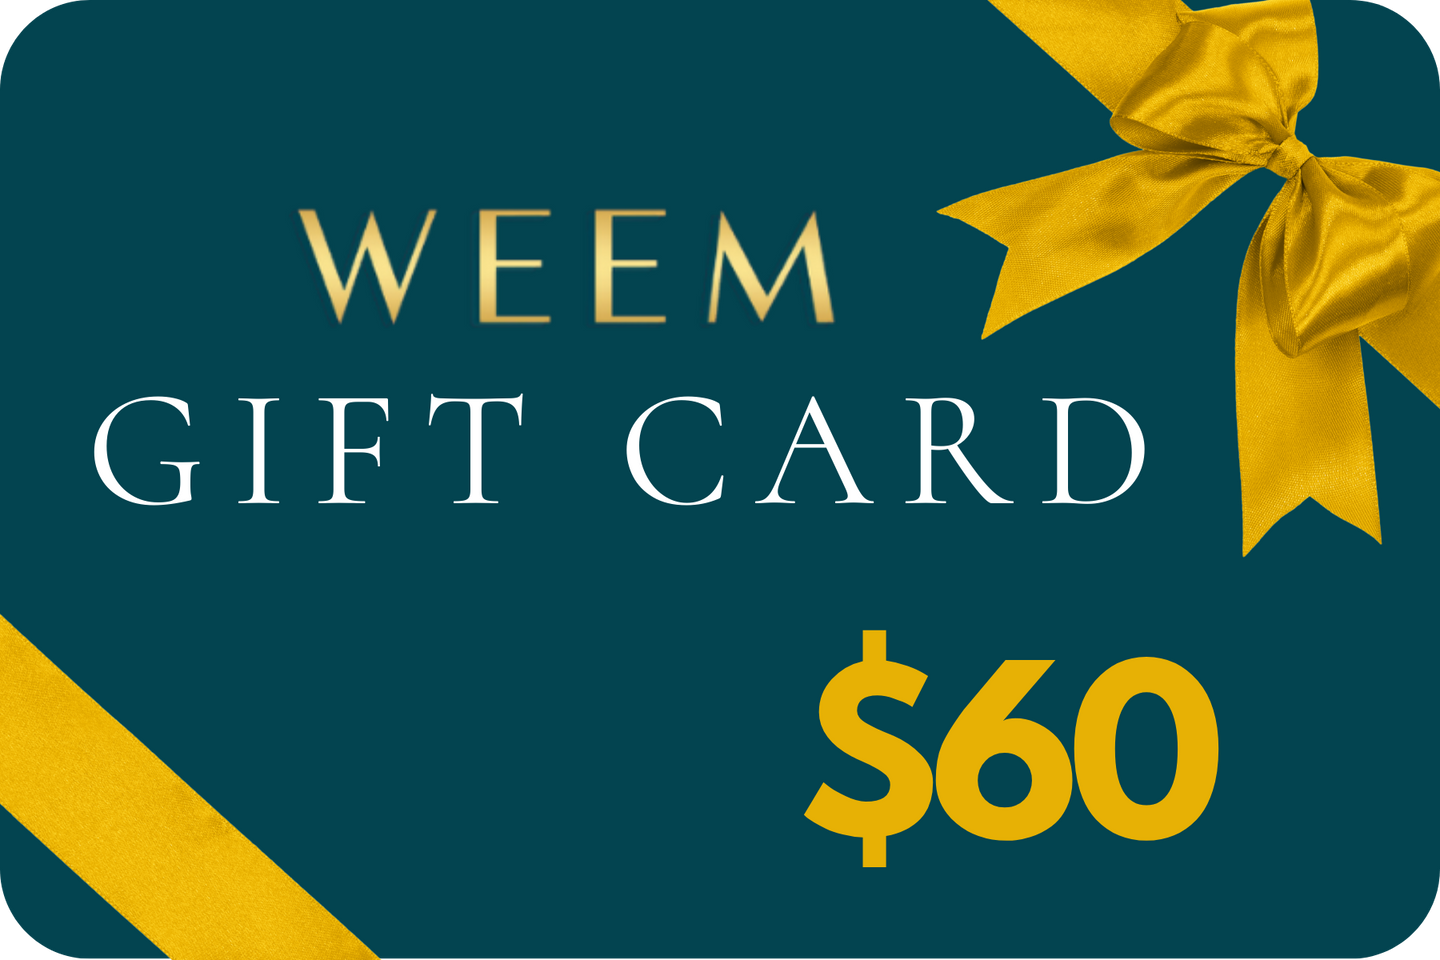 WEEM $60 Gift Card